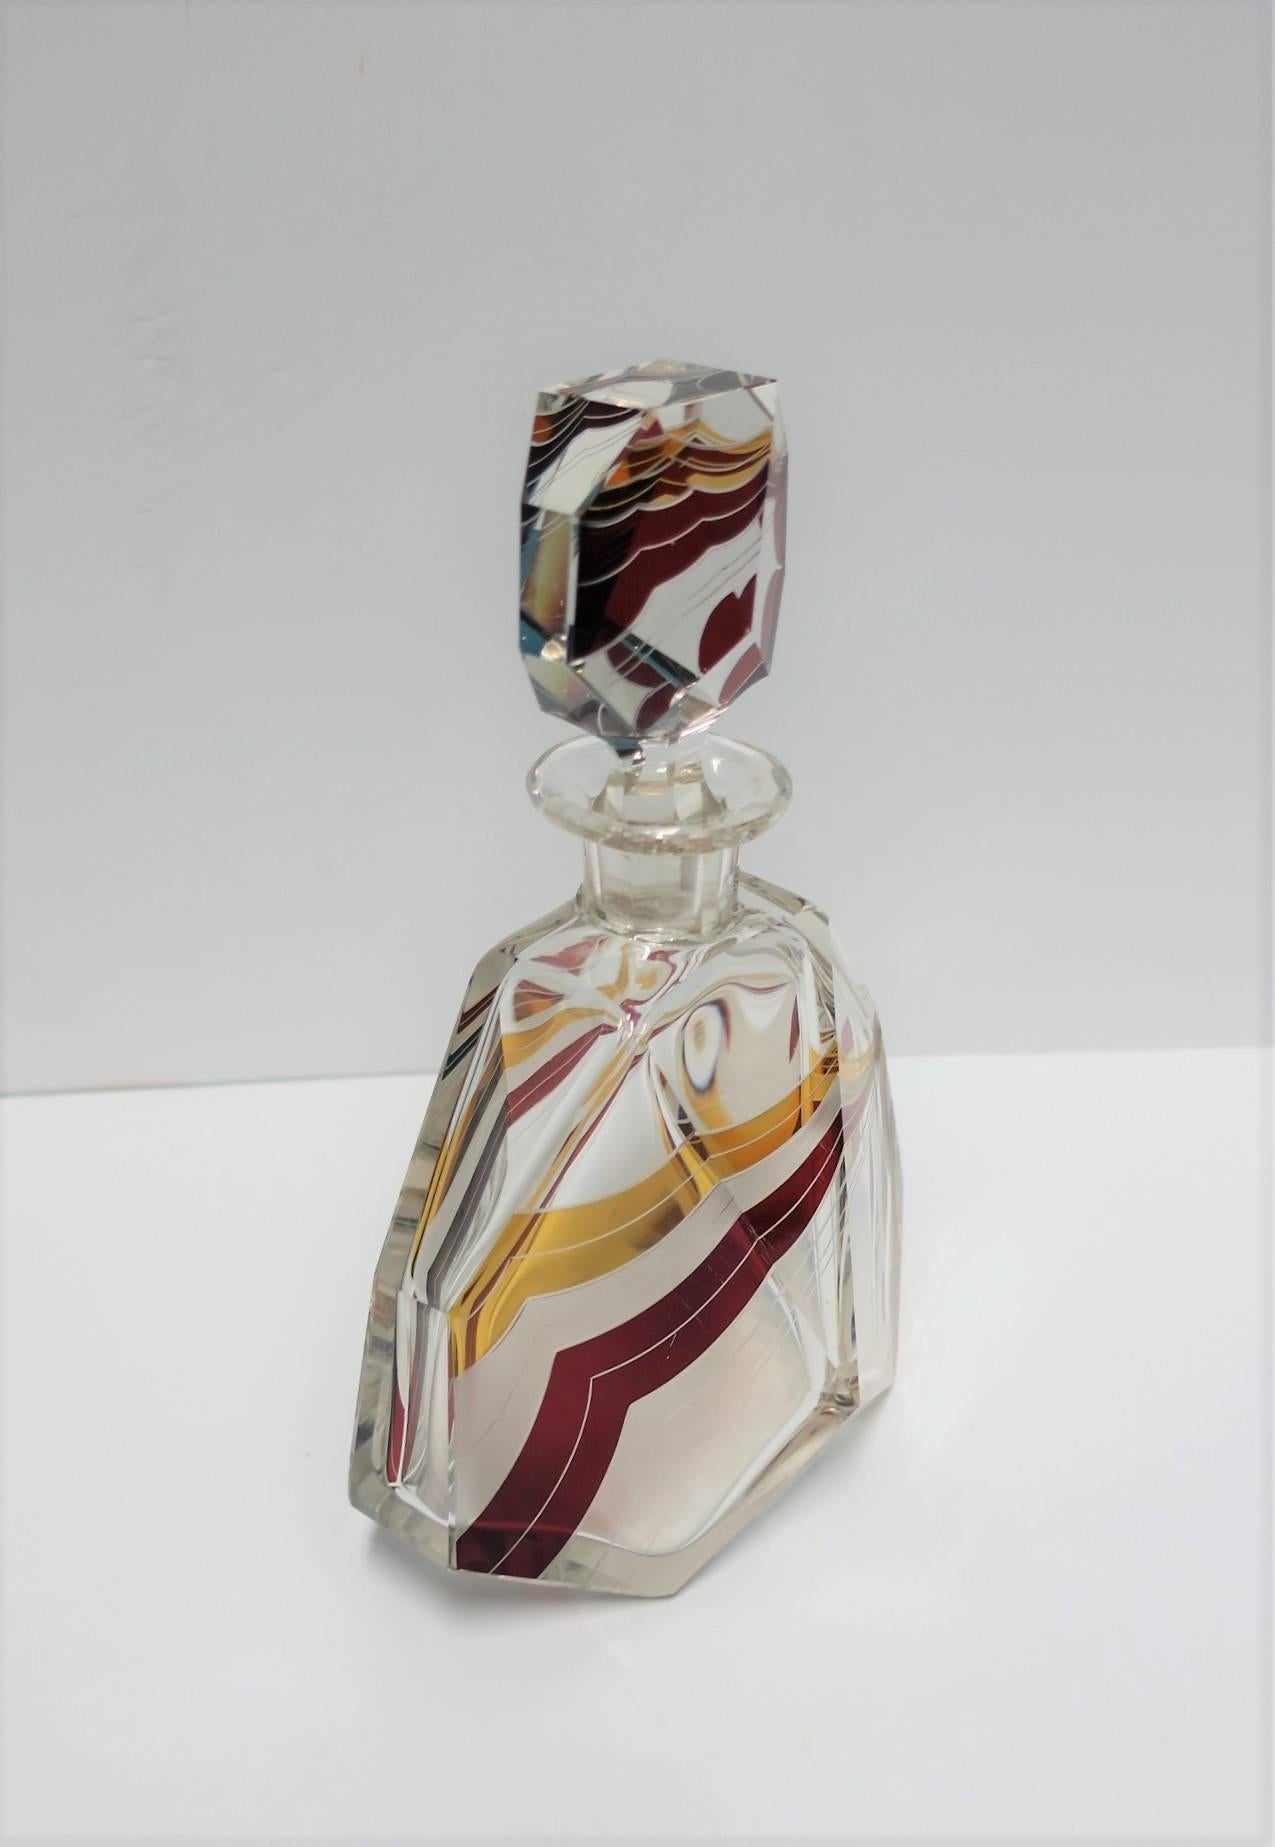 European Art Deco Liquor or Spirits Crystal Decanter by Designer Karl Palda 1